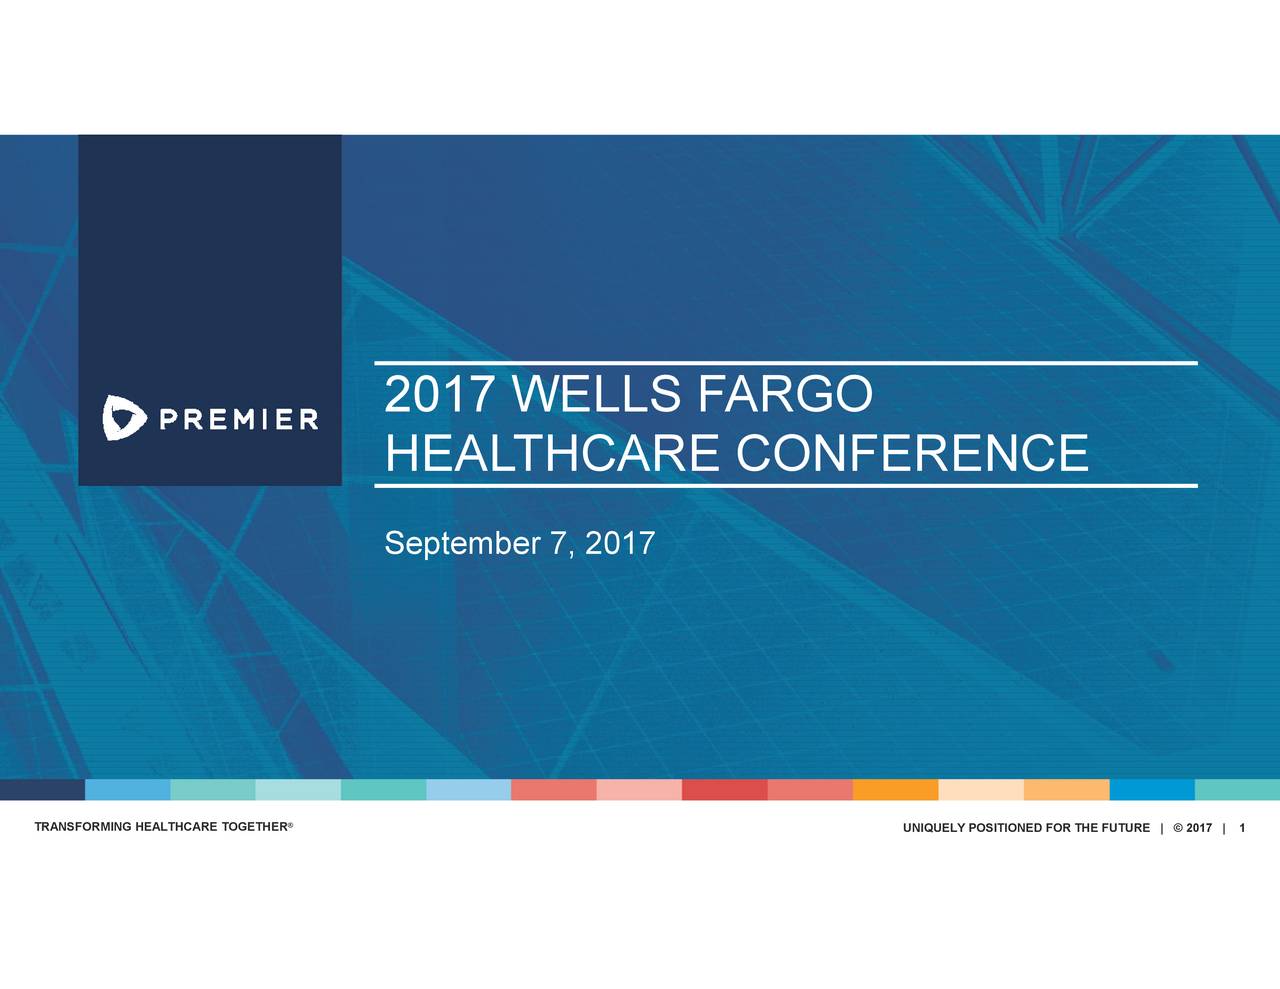 Premier (PINC) Presents At 2017 Wells Fargo Healthcare Conference